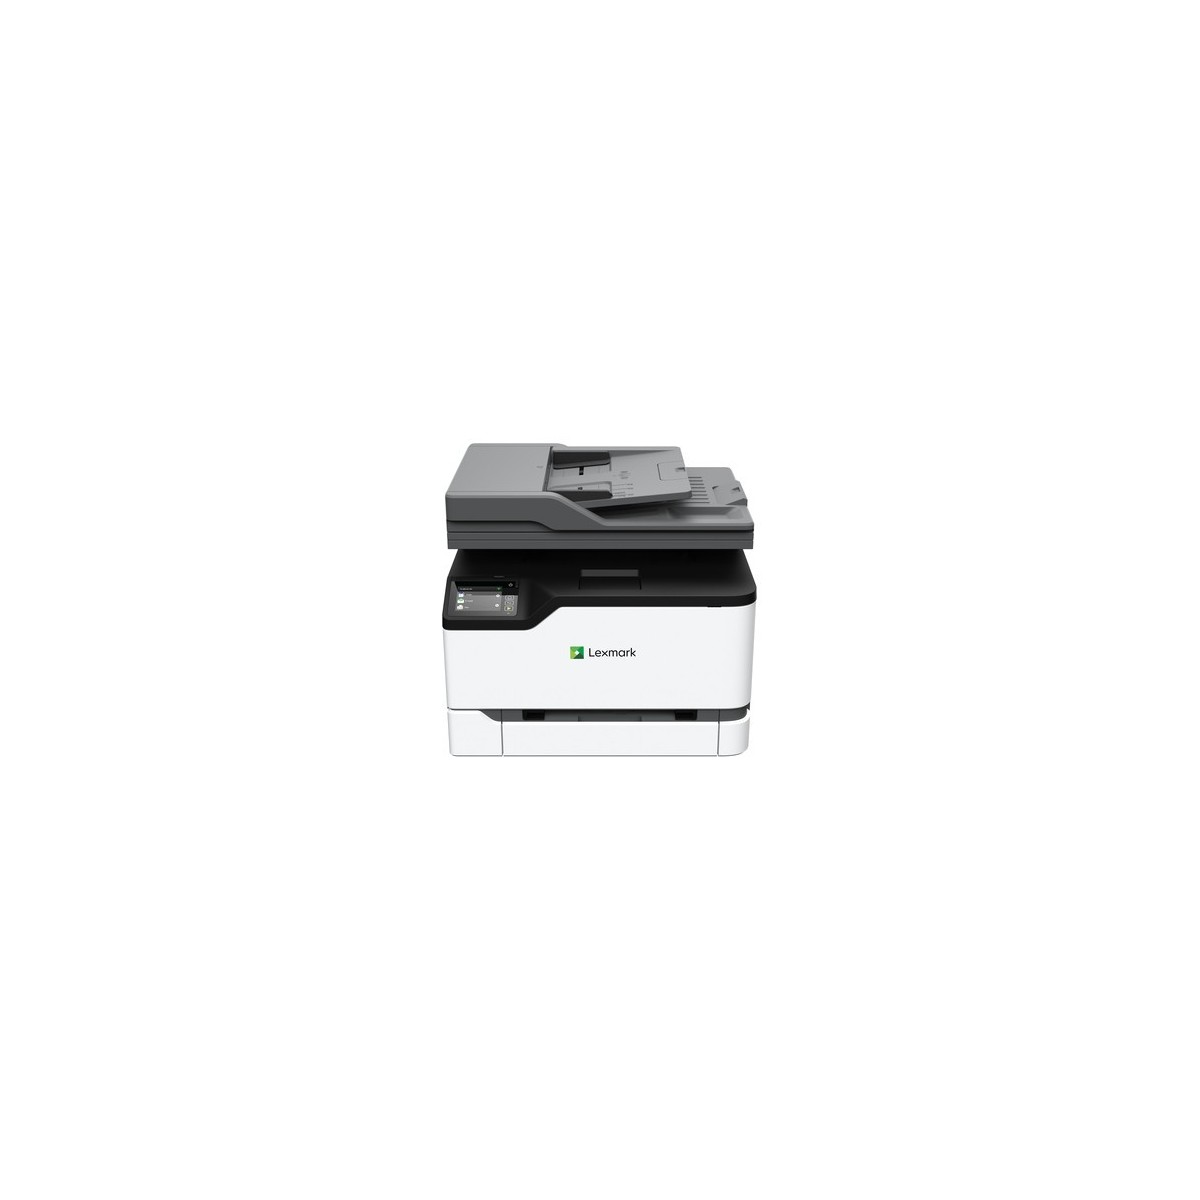 Lexmark 40N9170 - Laser - Colour printing - 600 x 600 DPI - A4 - Direct printing - Black - White